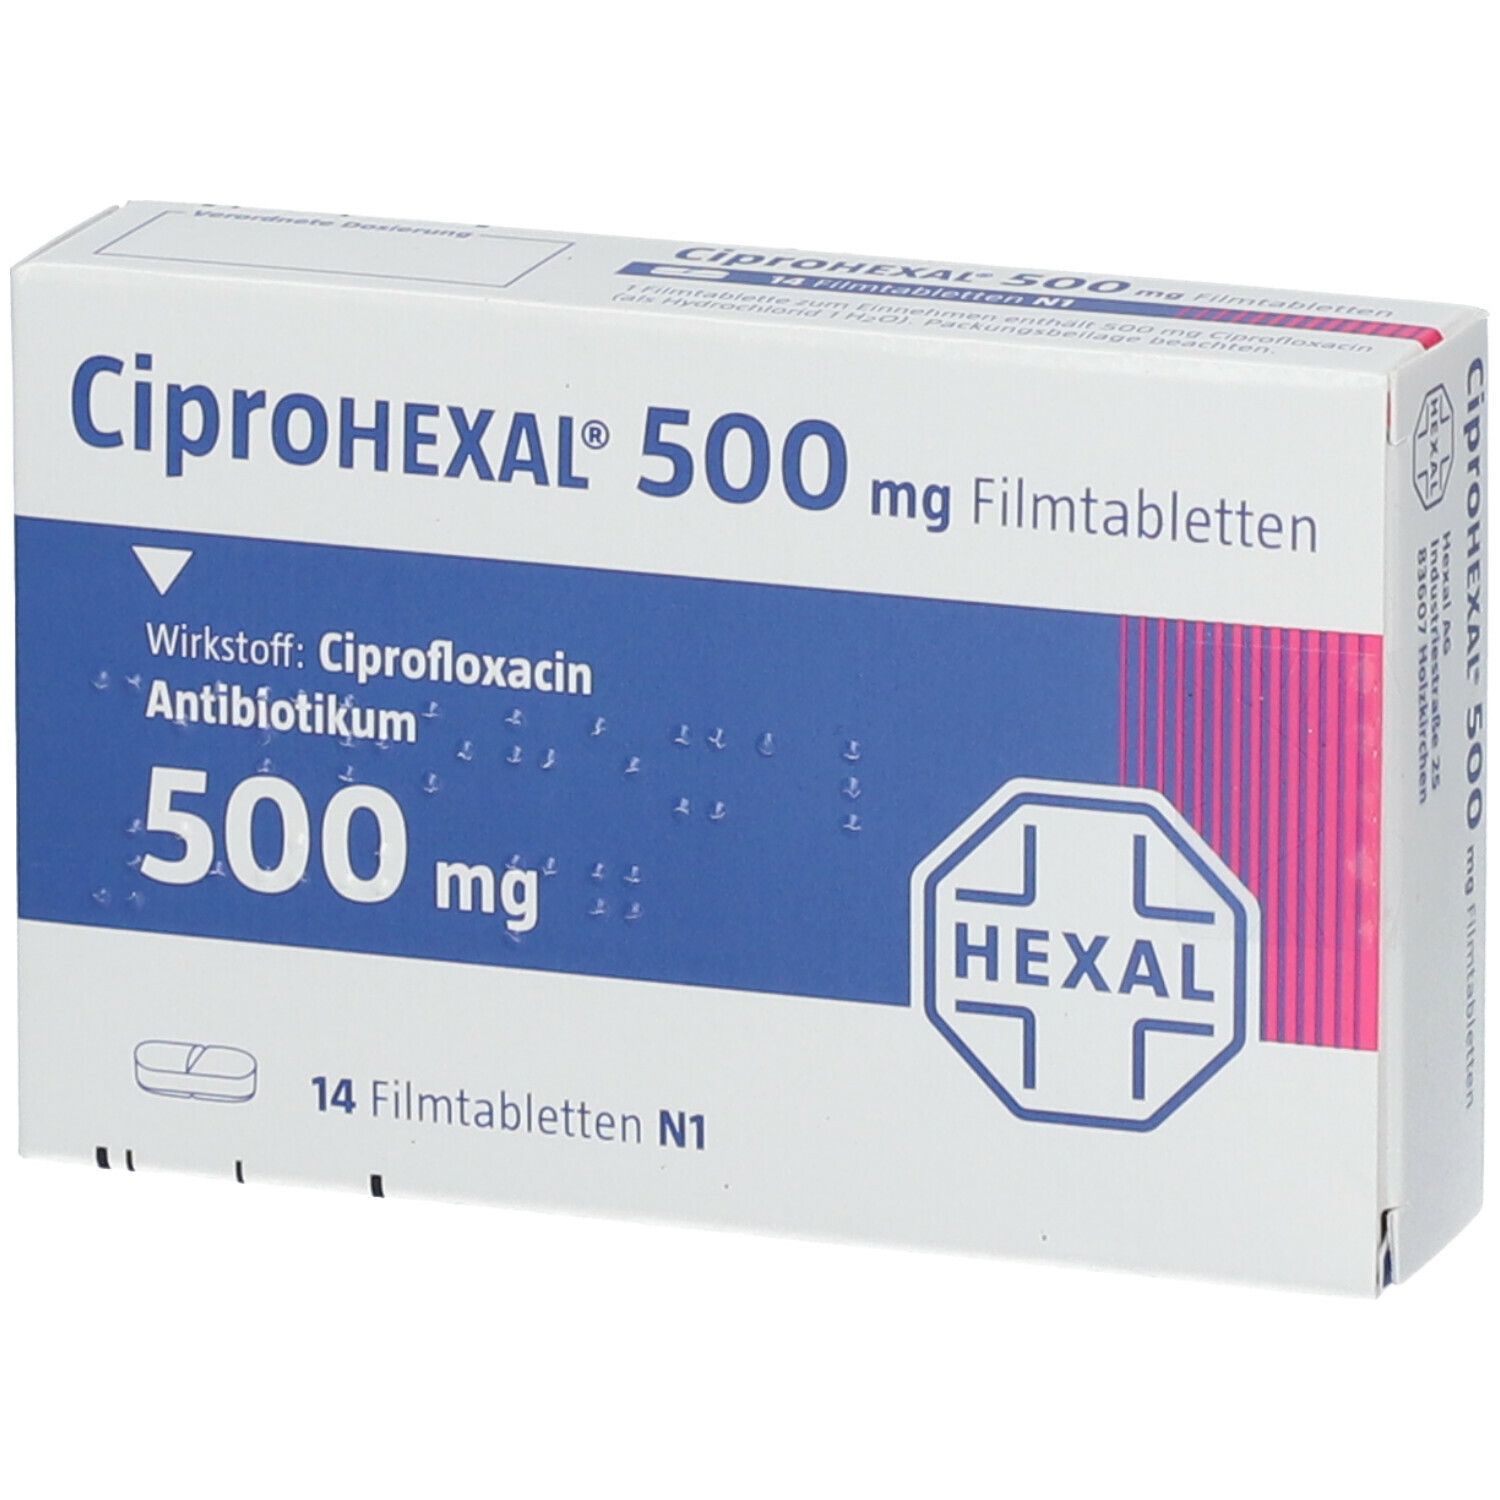 CiproHEXAL® 500 mg